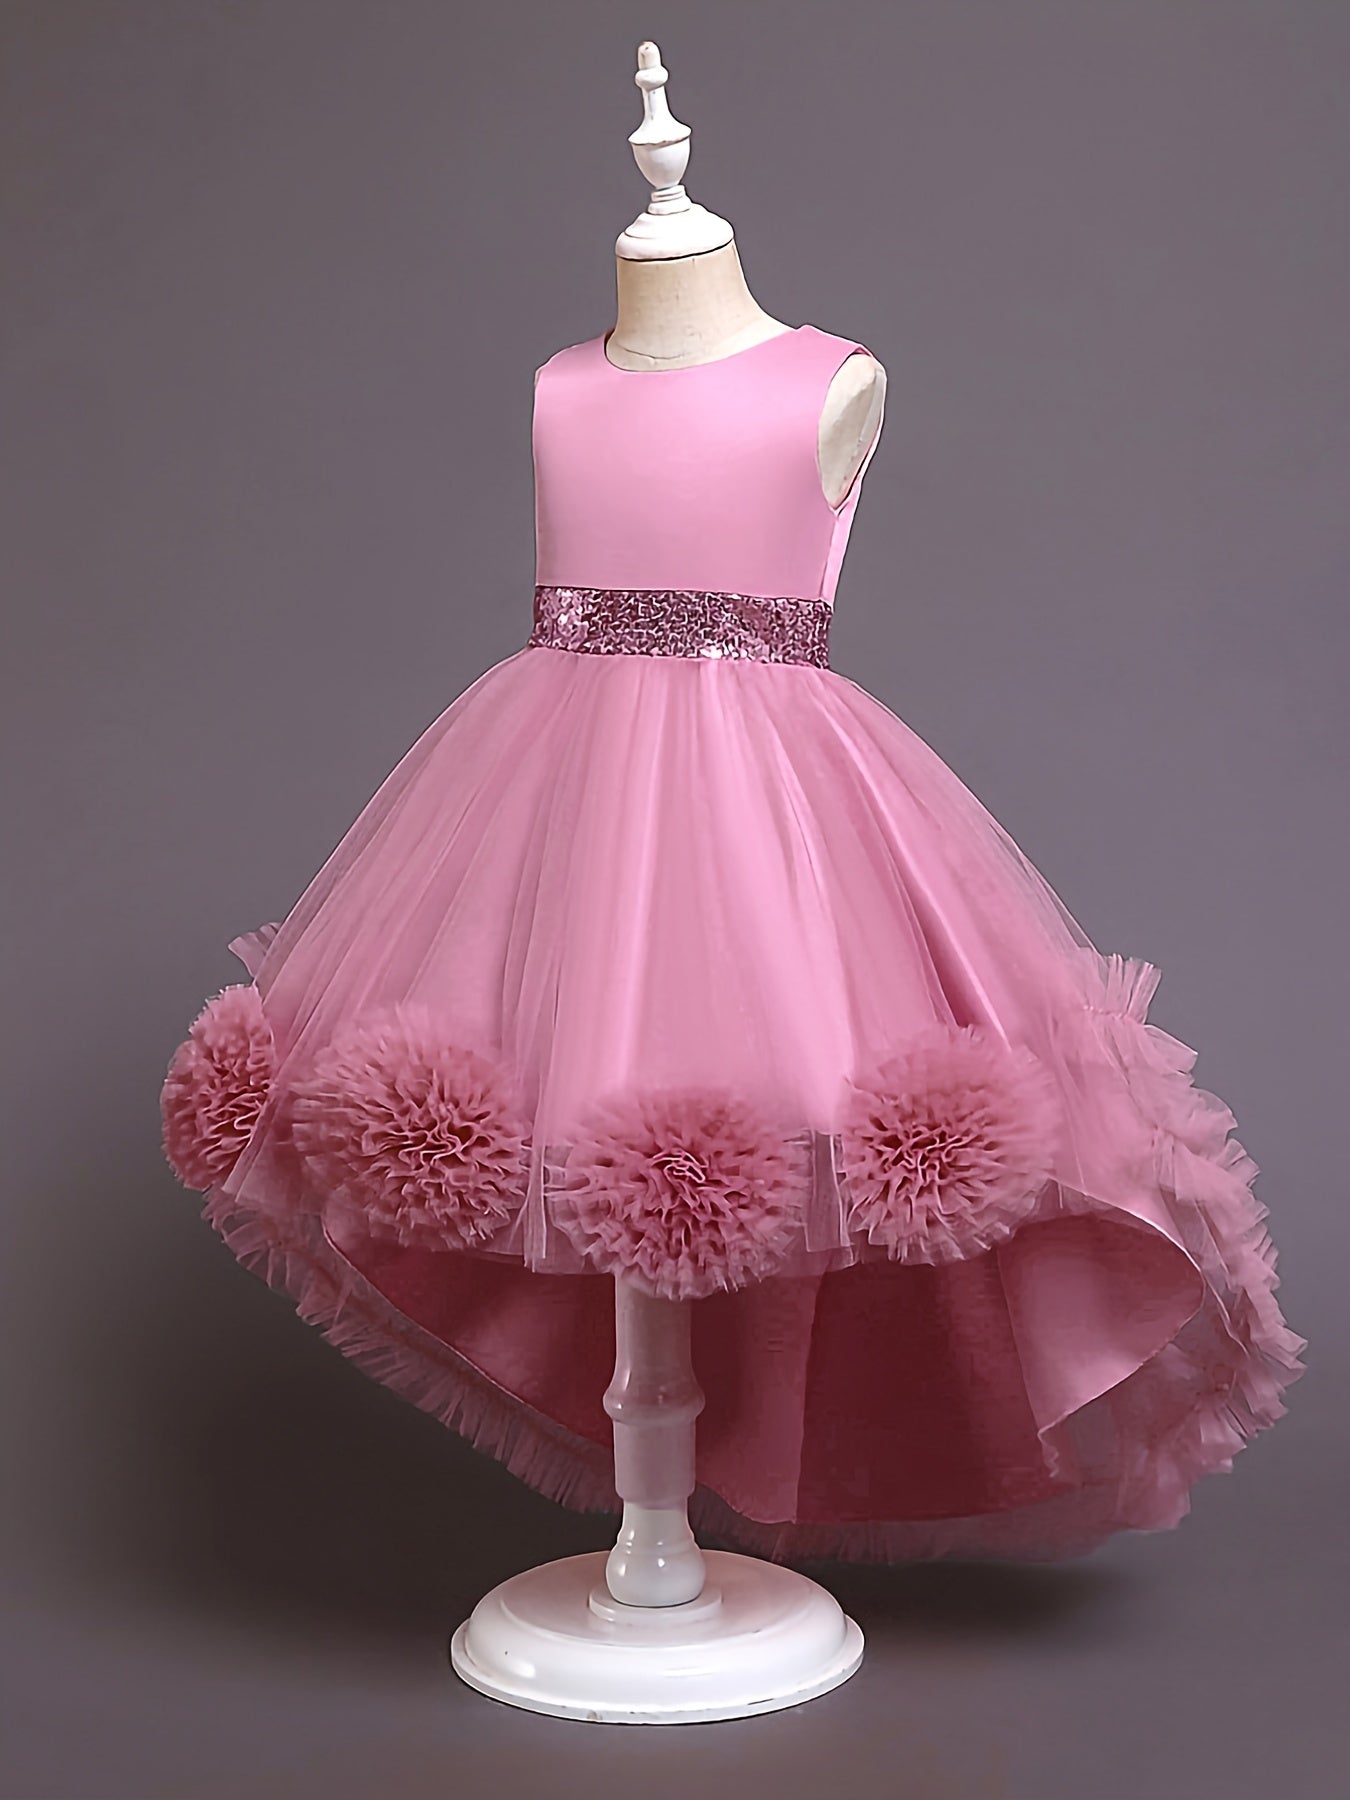 Sleek and Sparkling Sequin Princess Dress for Girls